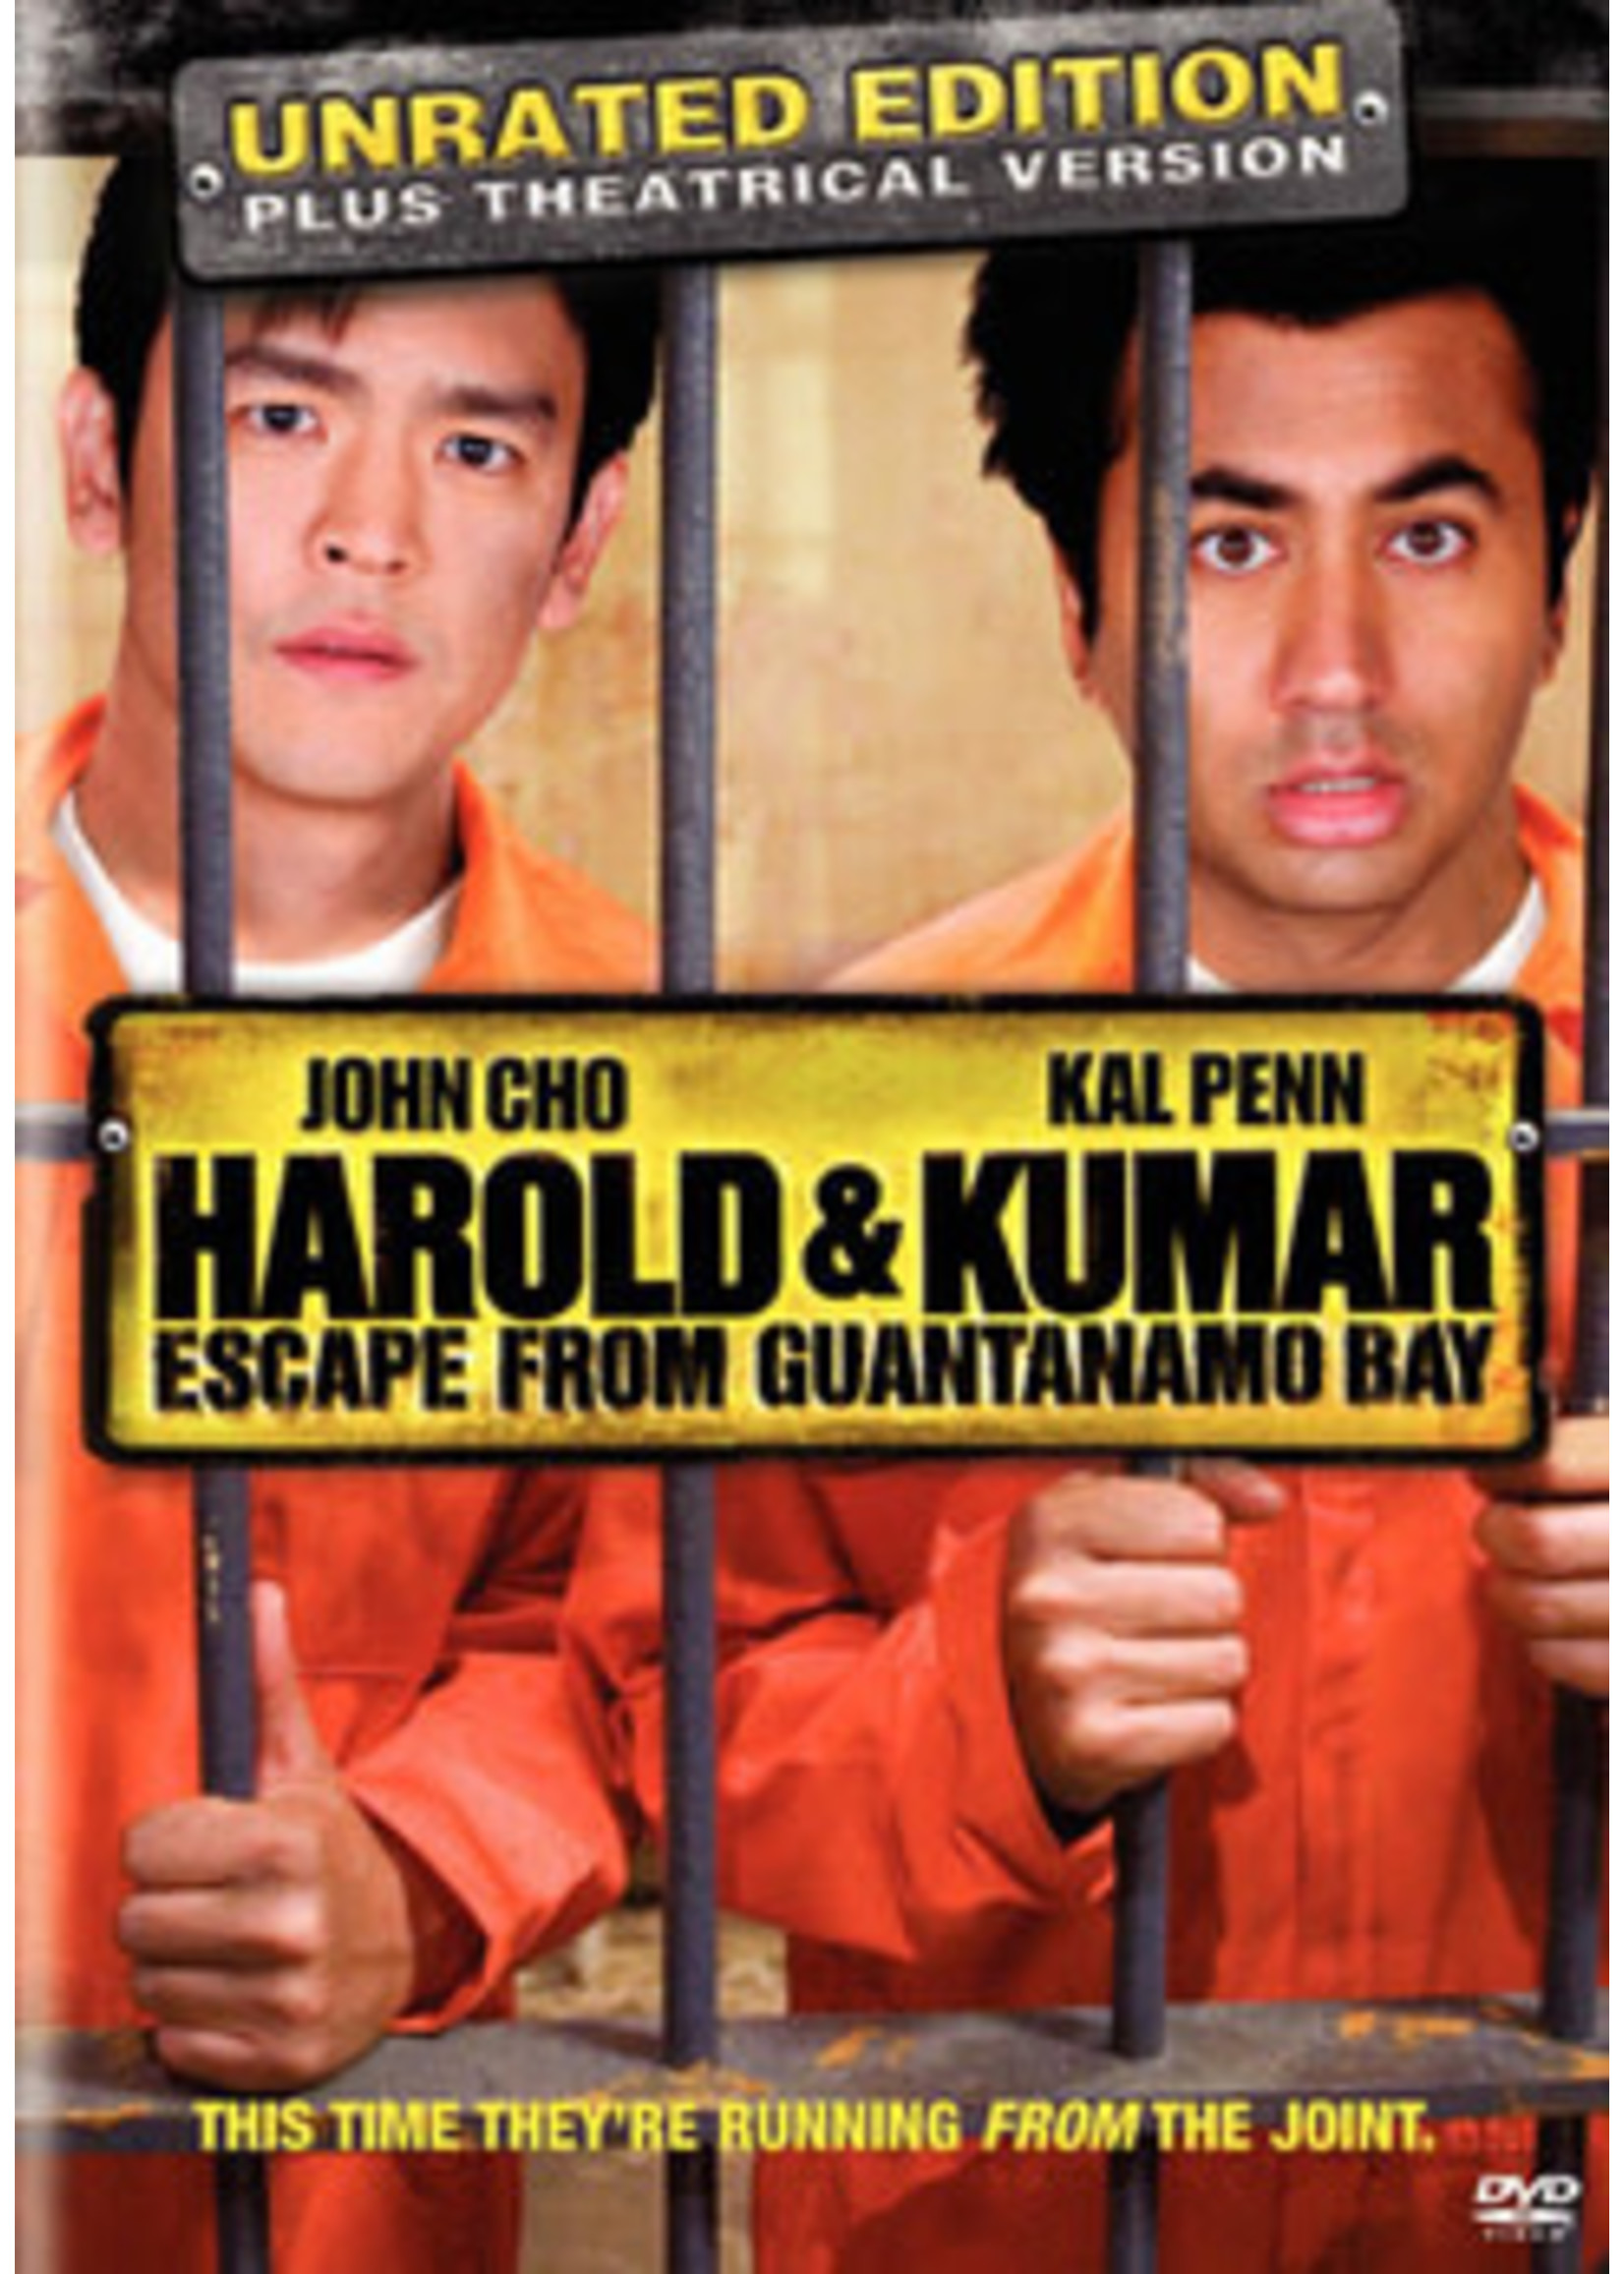 Harold & Kumar Escape from Guantanamo Bay DVD